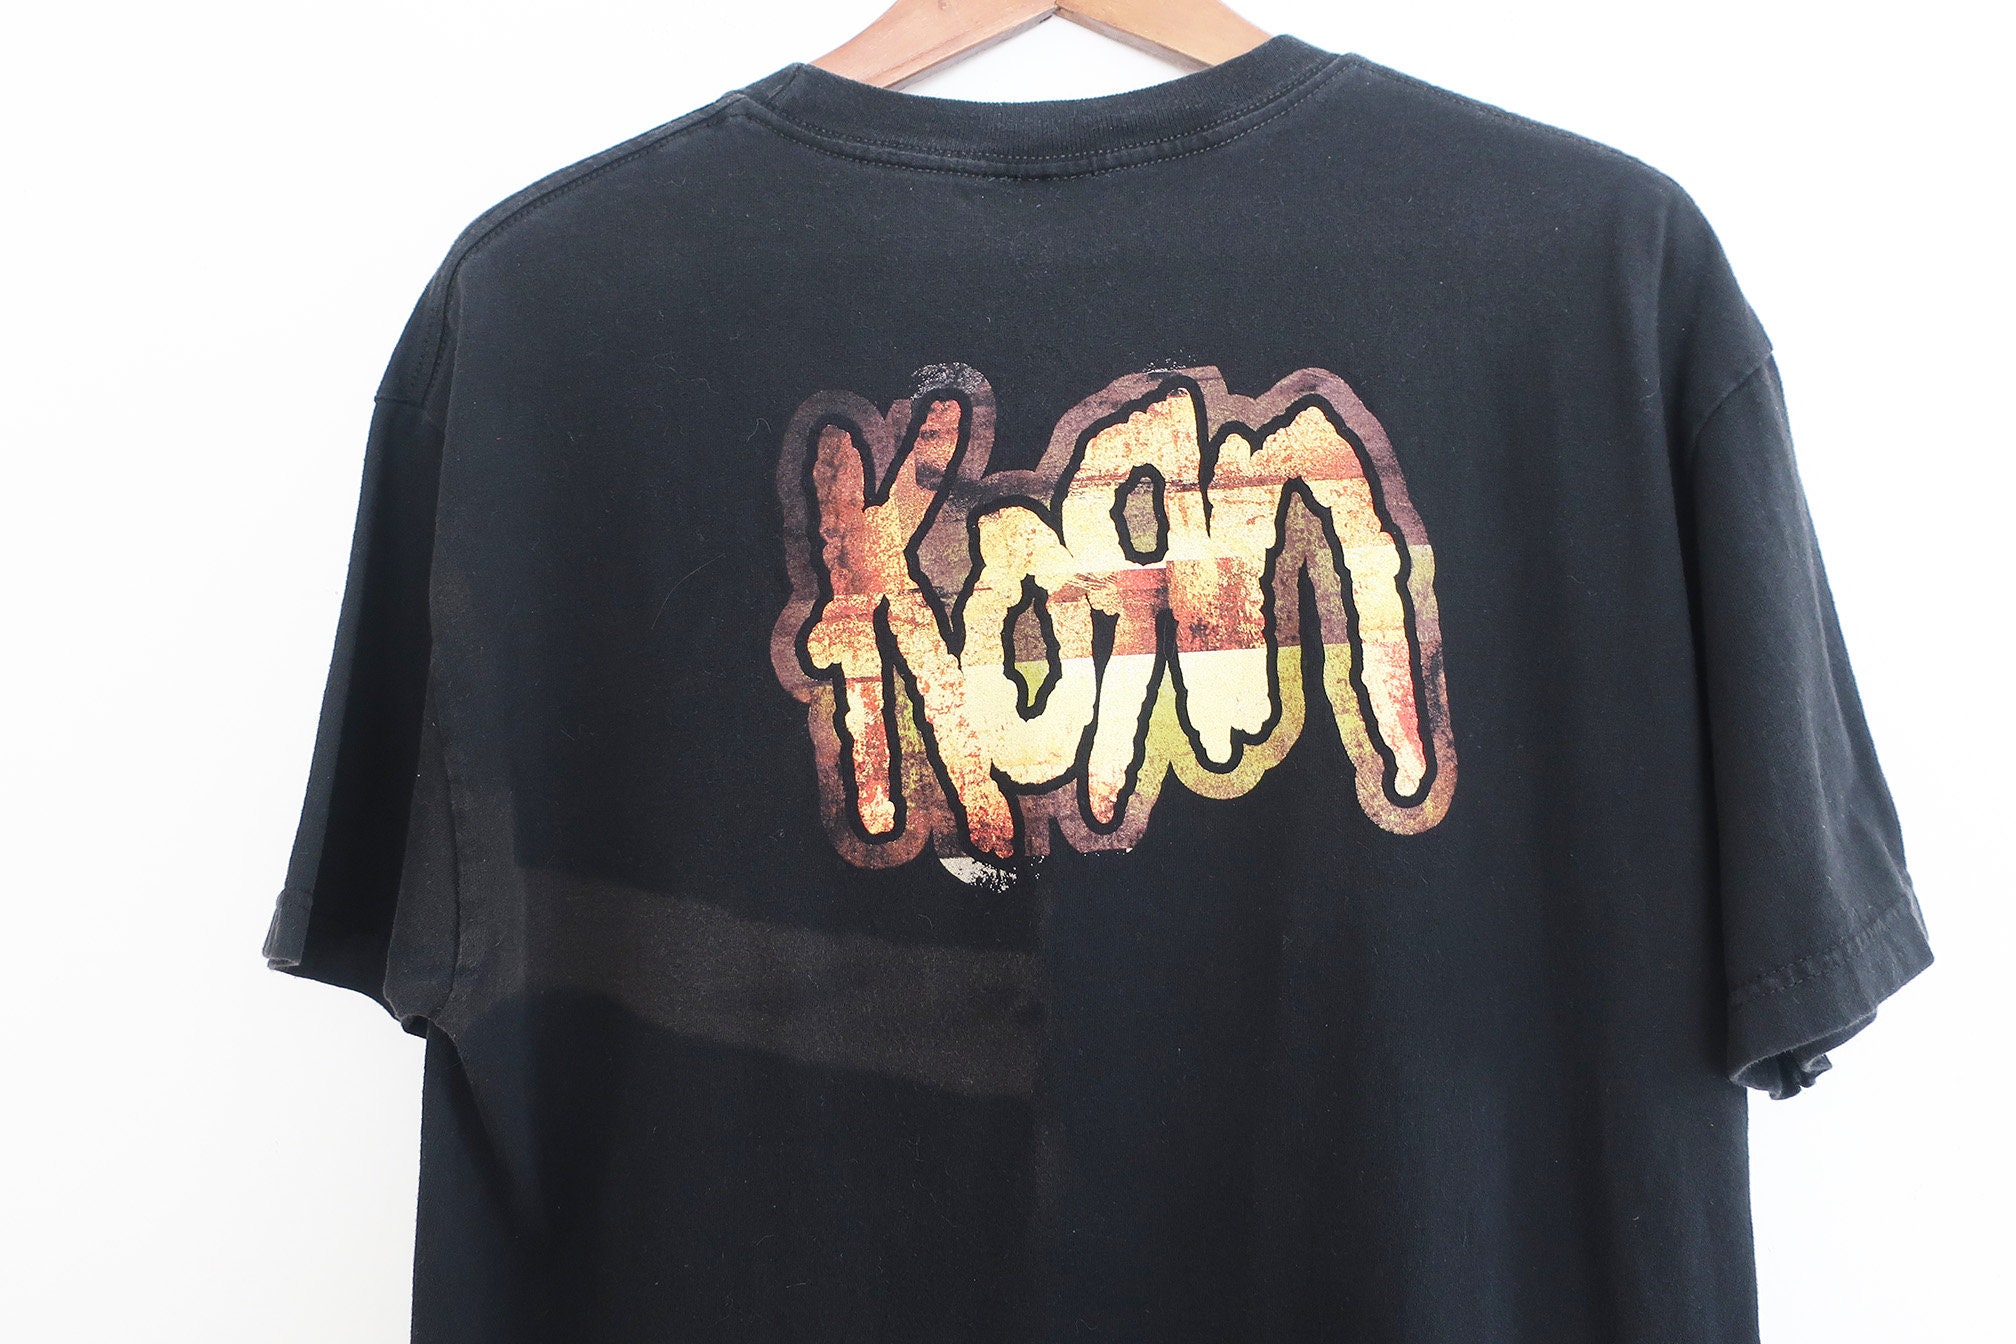 Vintage t shirt / Korn t shirt / 90s band shirt / 2000s Korn | Etsy